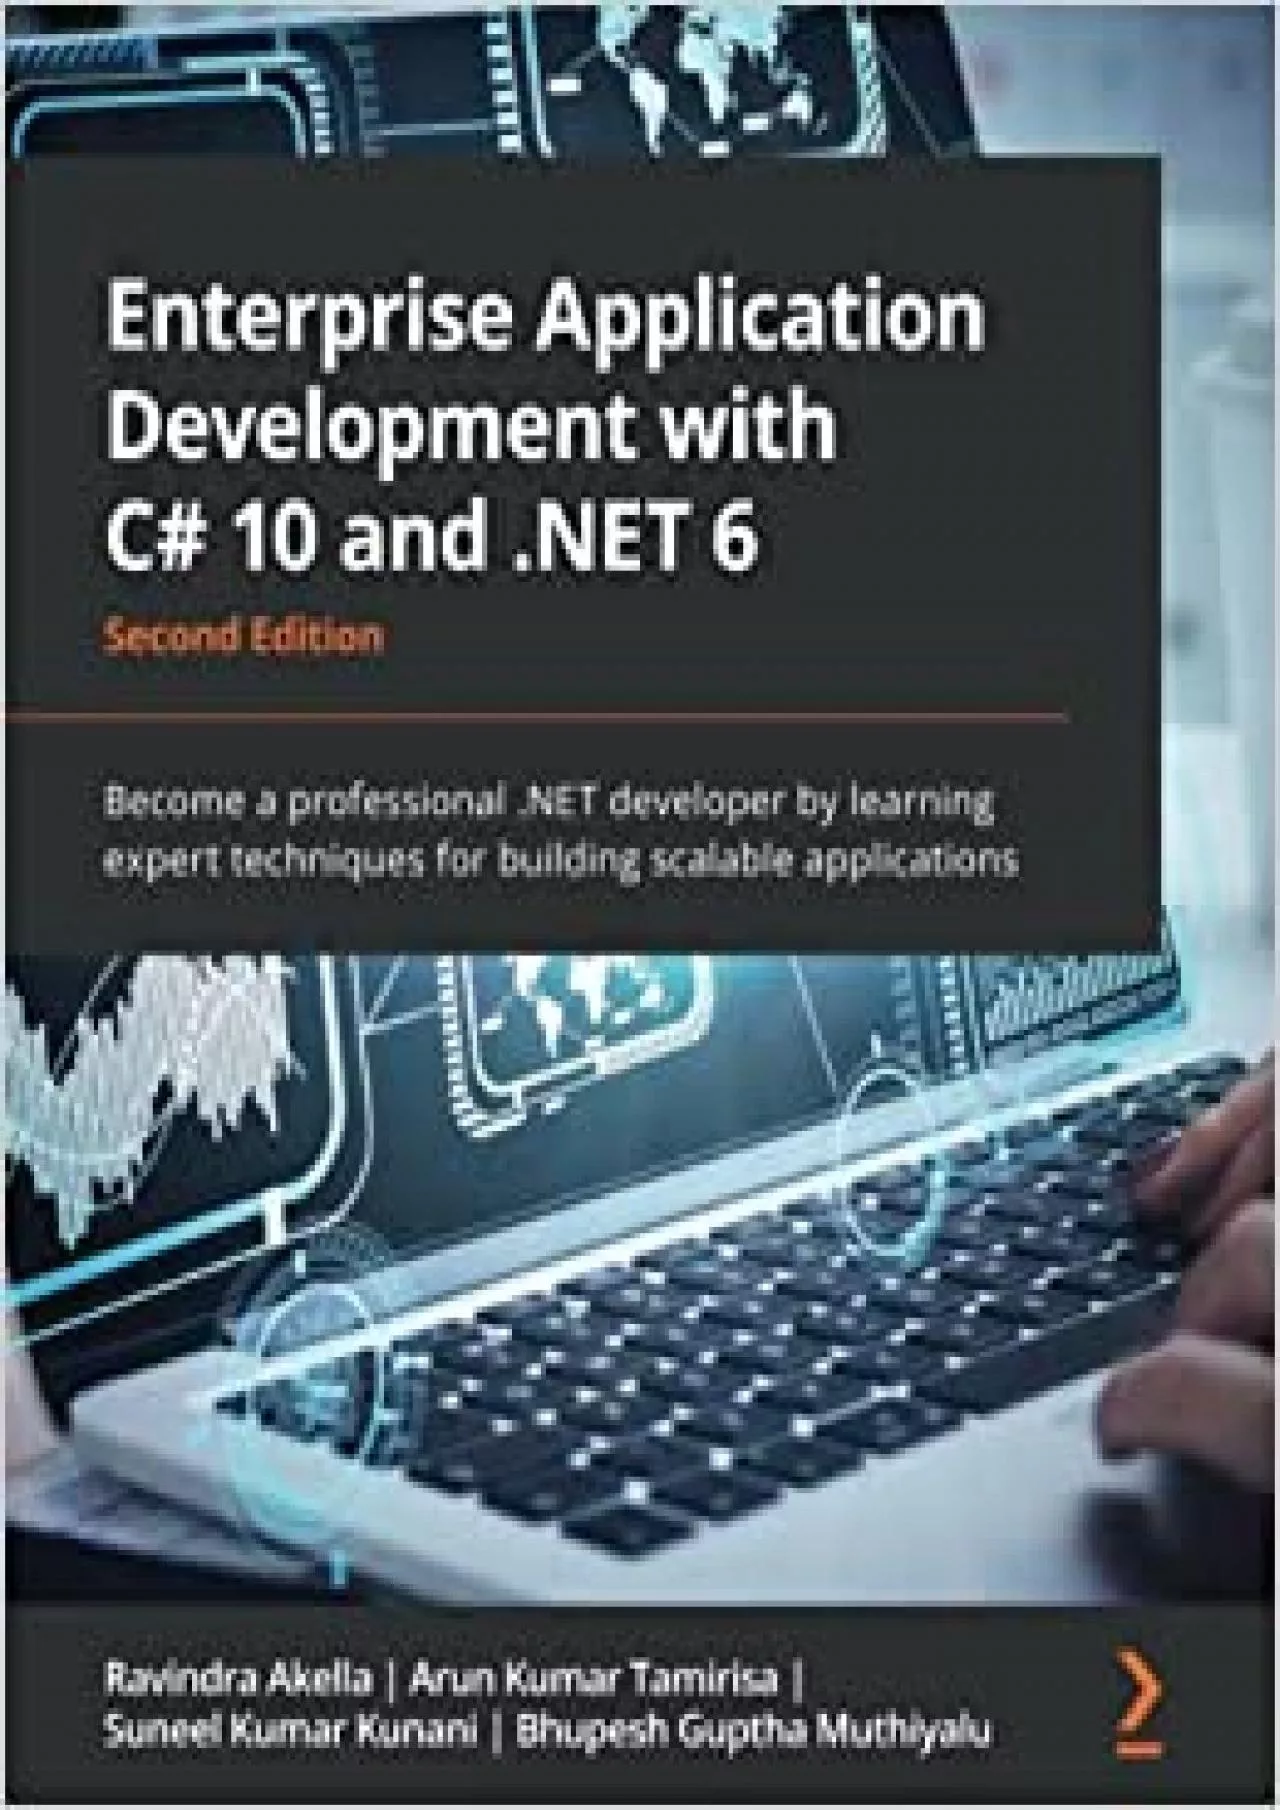 Enterprise Application Development with C# 10 and .NET 6: Become a professional .NET developer